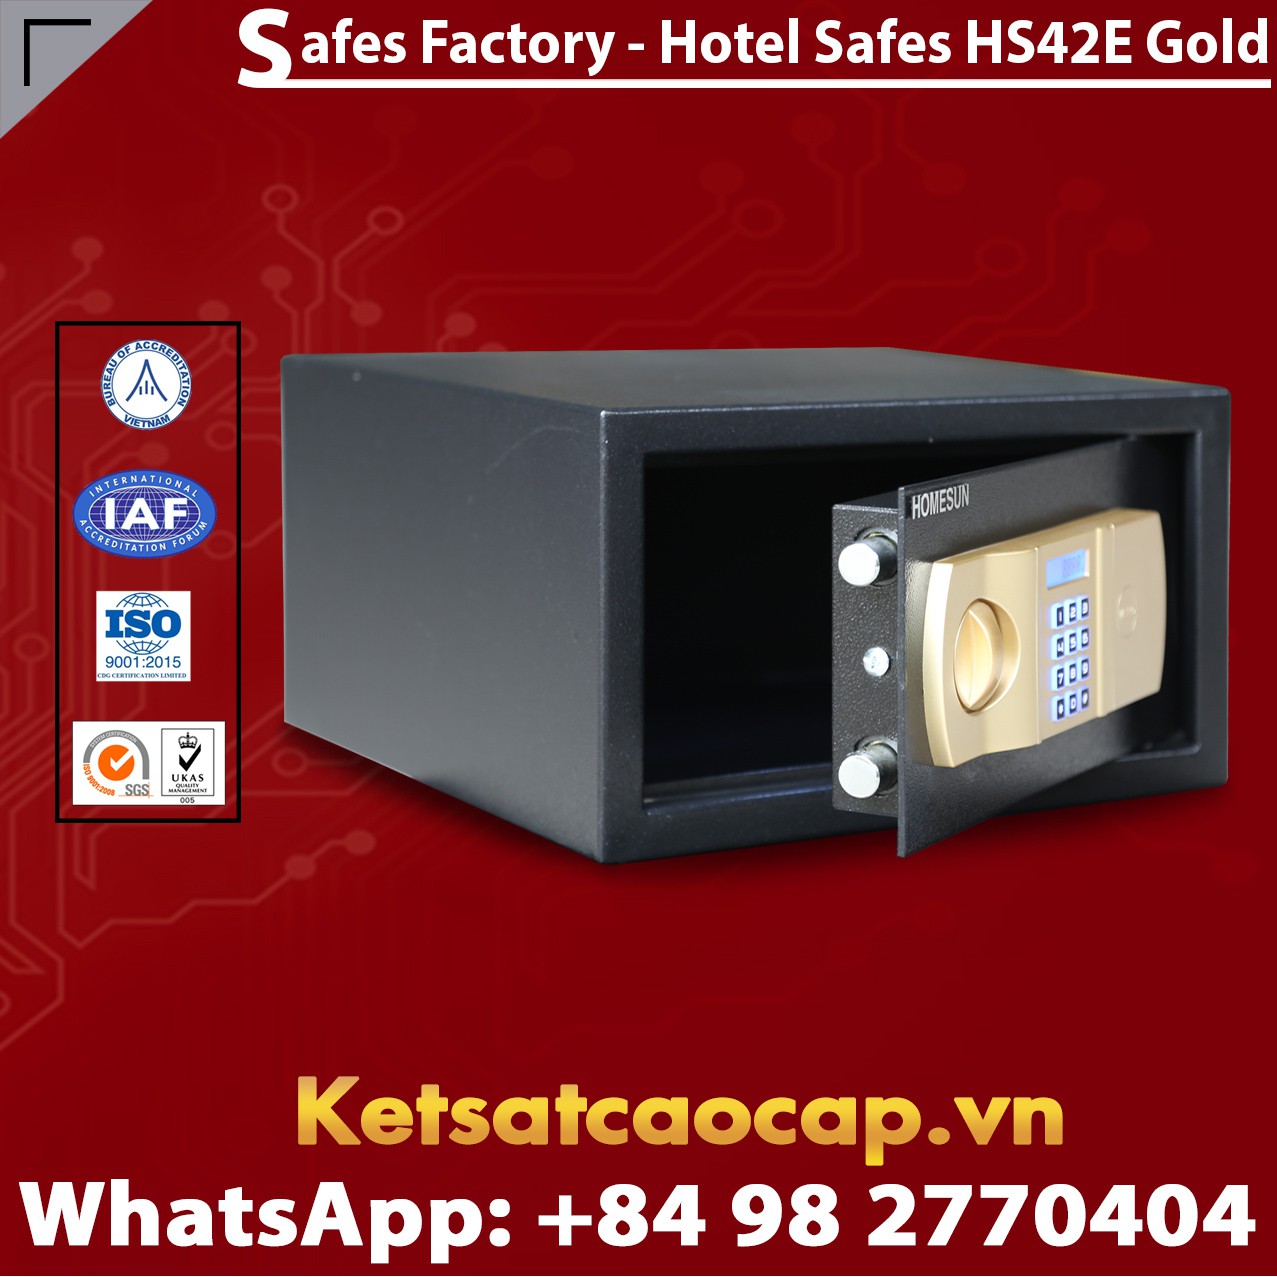 Hotel Safes HOMESUN HS42 E Gold